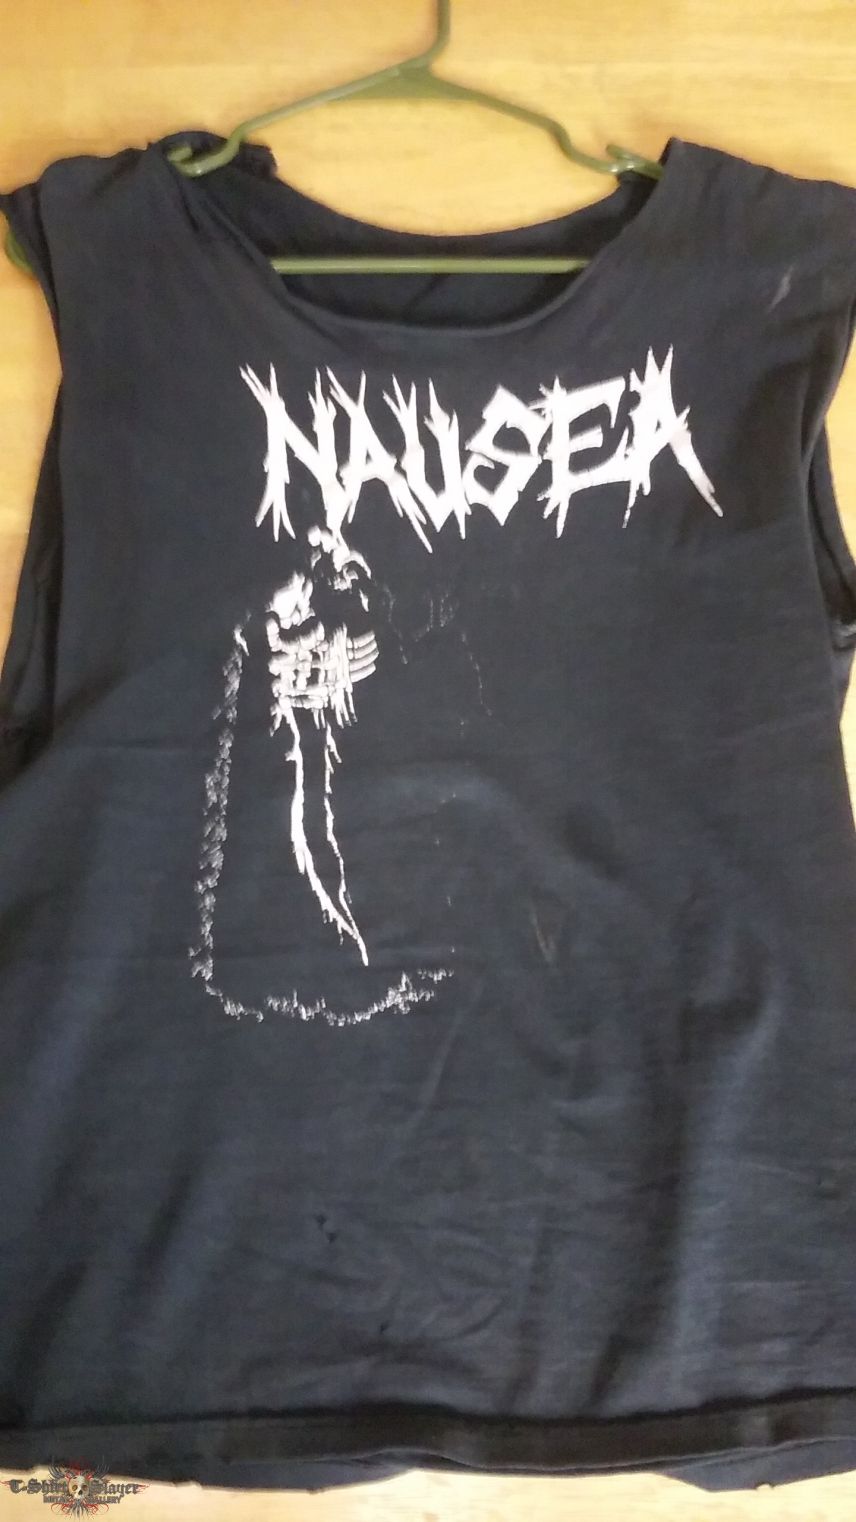 Nausea shirt